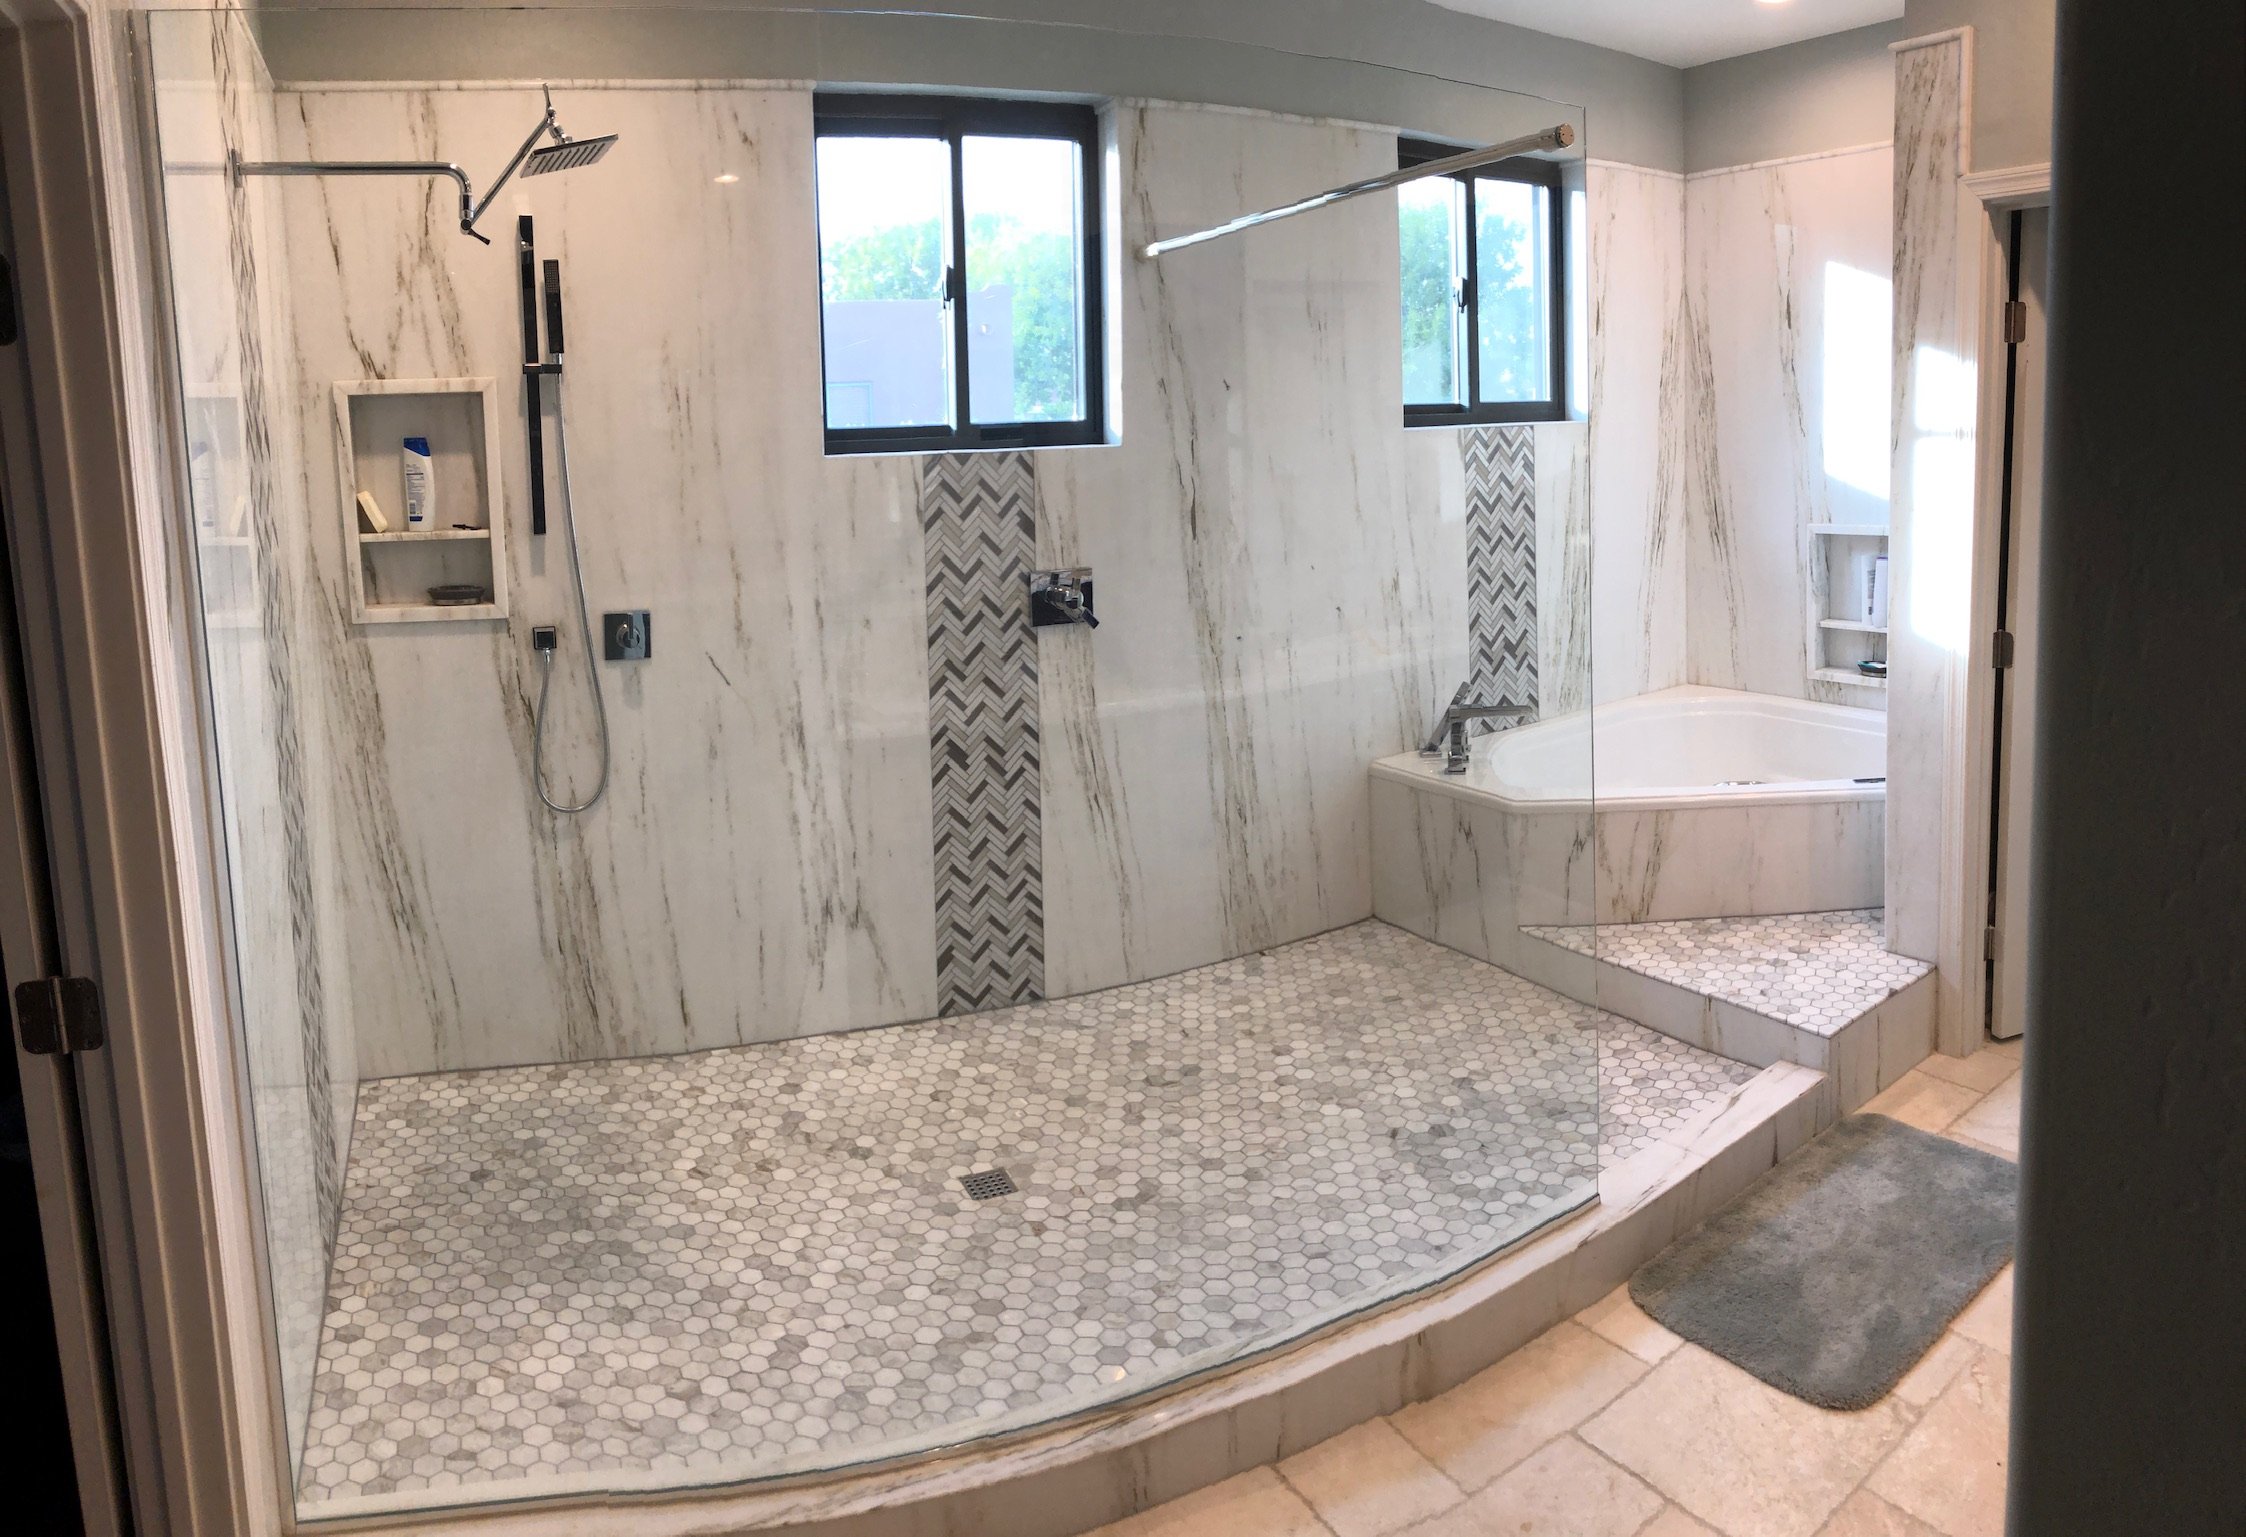 AZ New Bath - Remodel Kitchen and Bath - Arizona0073.JPG